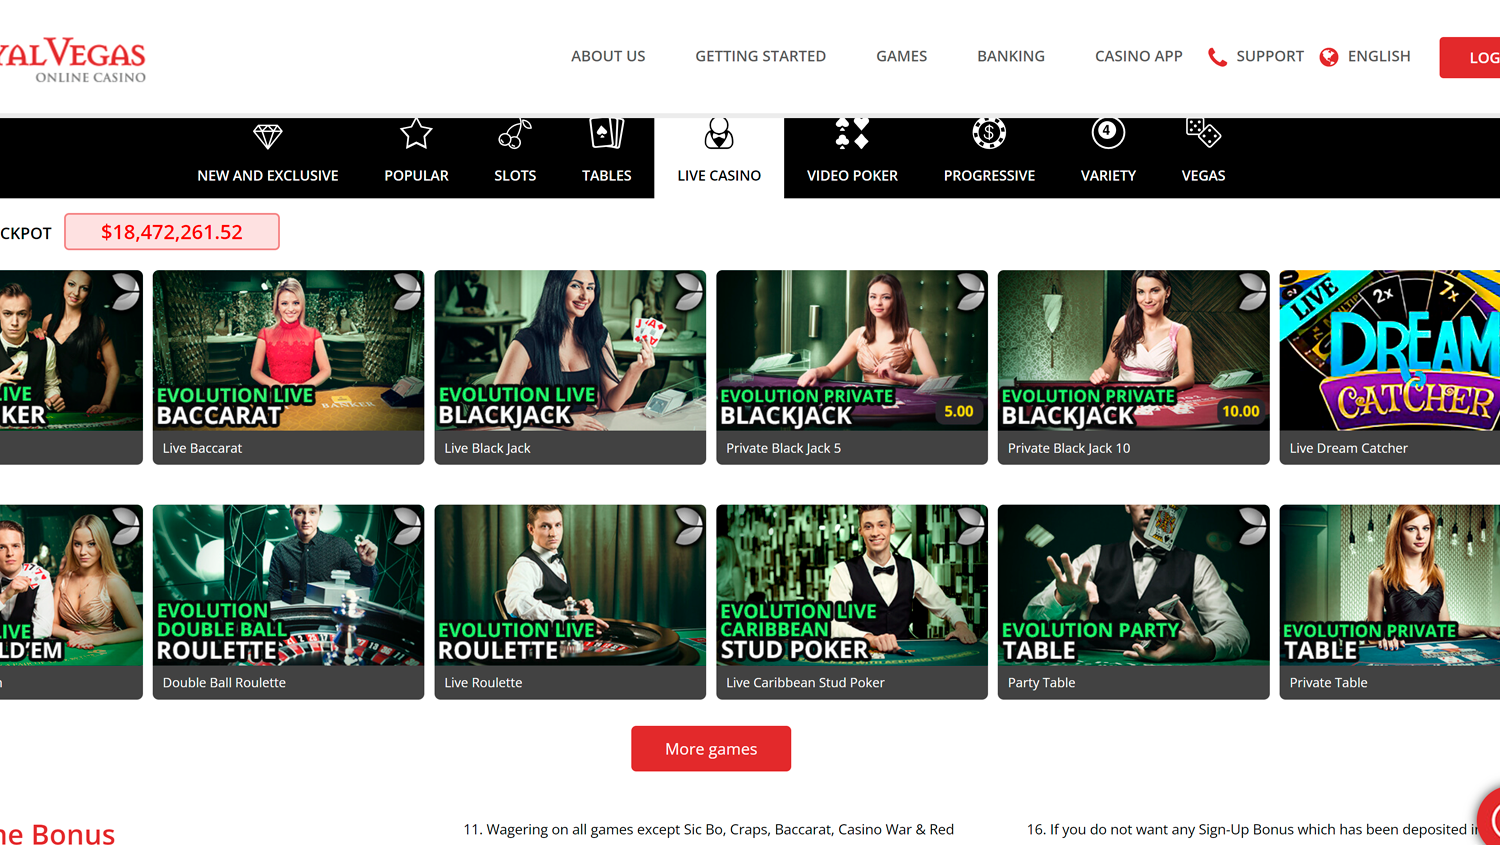 Screenshot of Live Casino Page on Royal Vegas Casino site